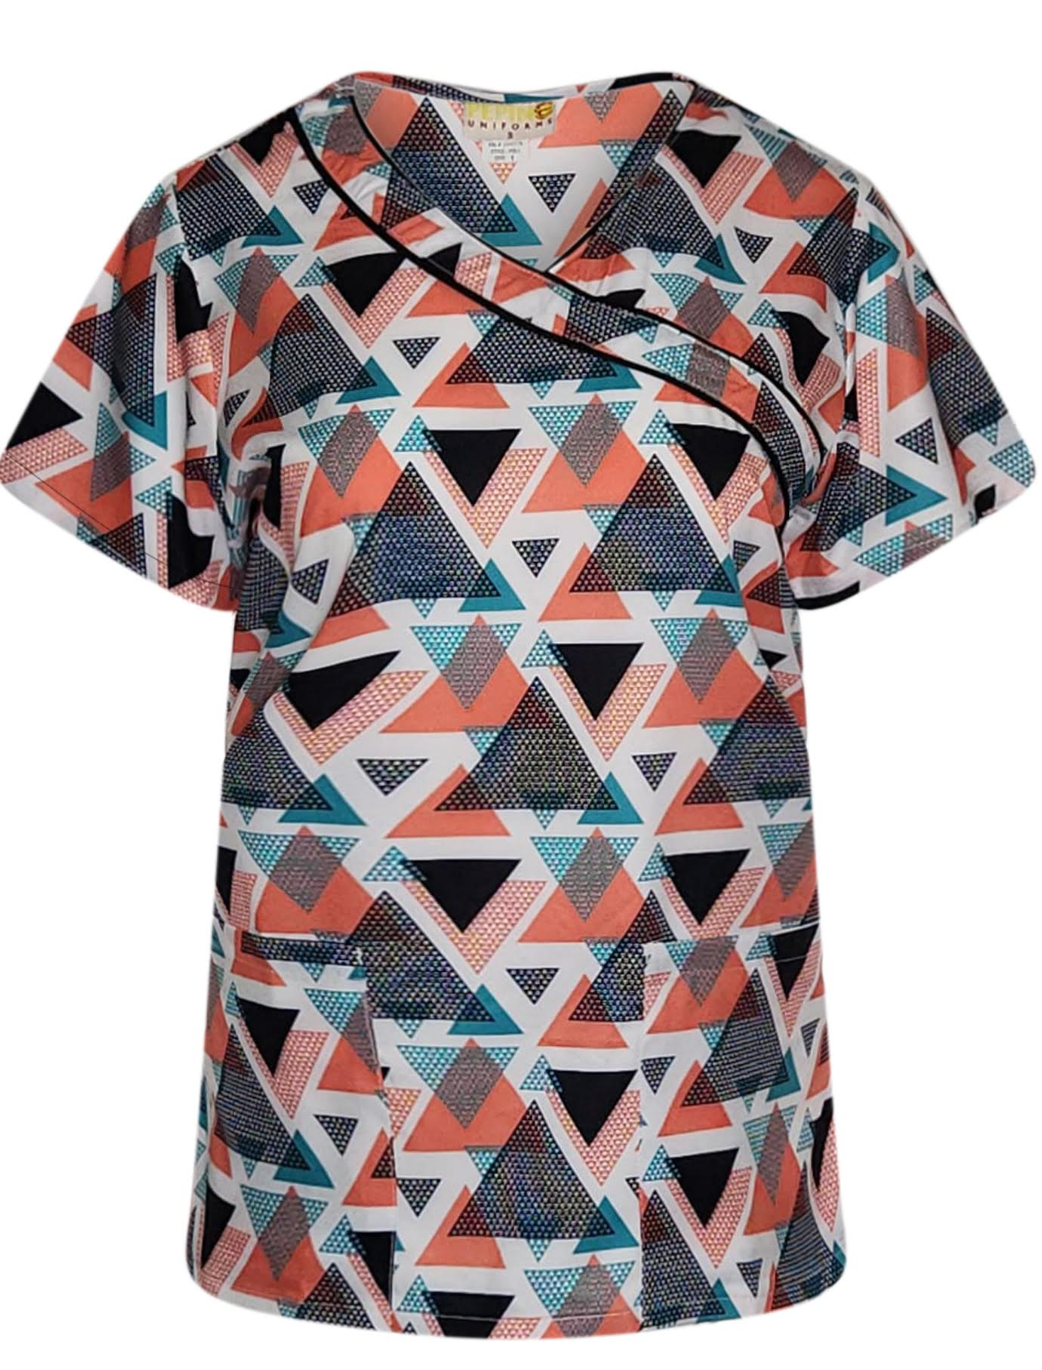 Pepino Uniforms Printed Linked Triangles Black Trim Mock Top